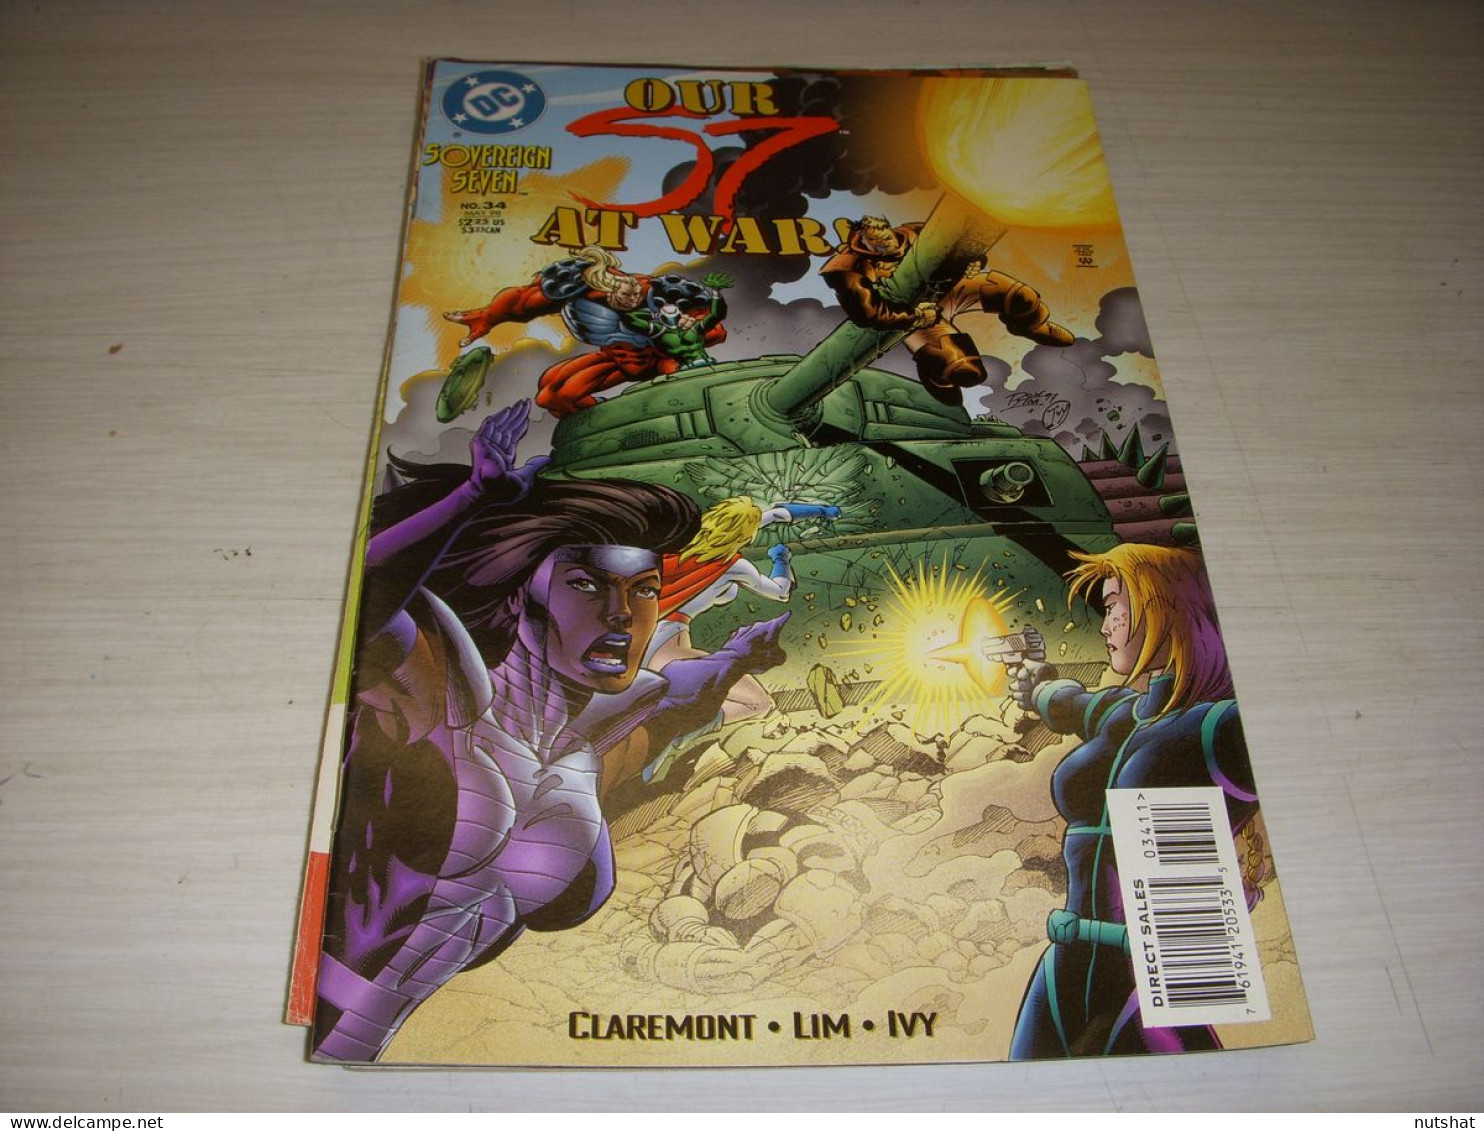 DC COMICS SOVEREIGN SEVEN N° 34 1998 OUR S7 AT WARS - Autre Magazines